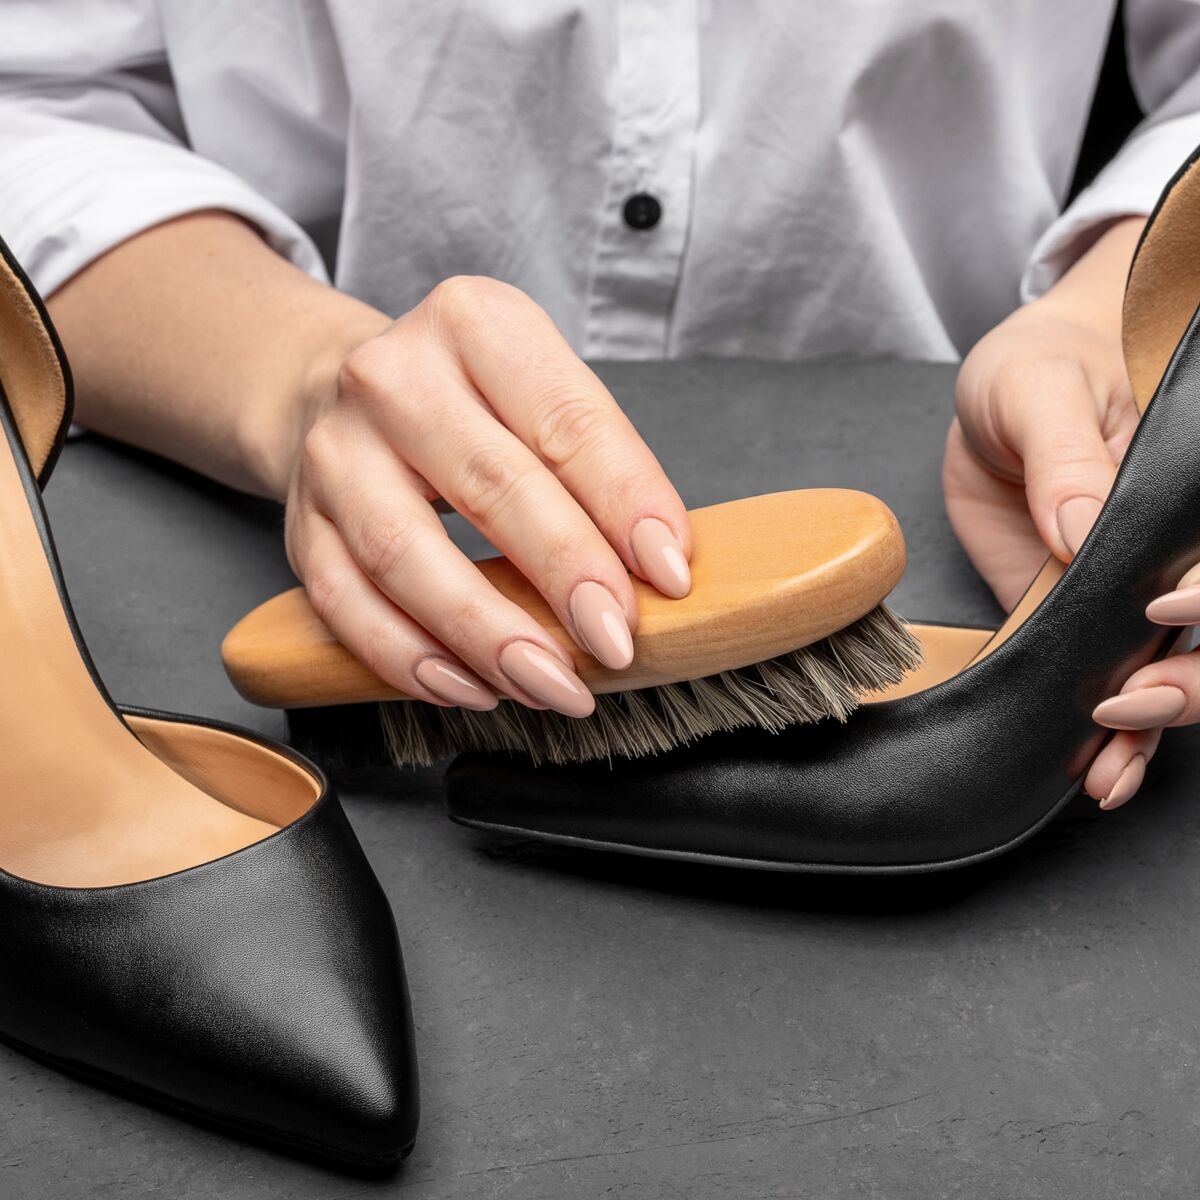 Velours, cuir, toile… Comment bien nettoyer ses chaussures